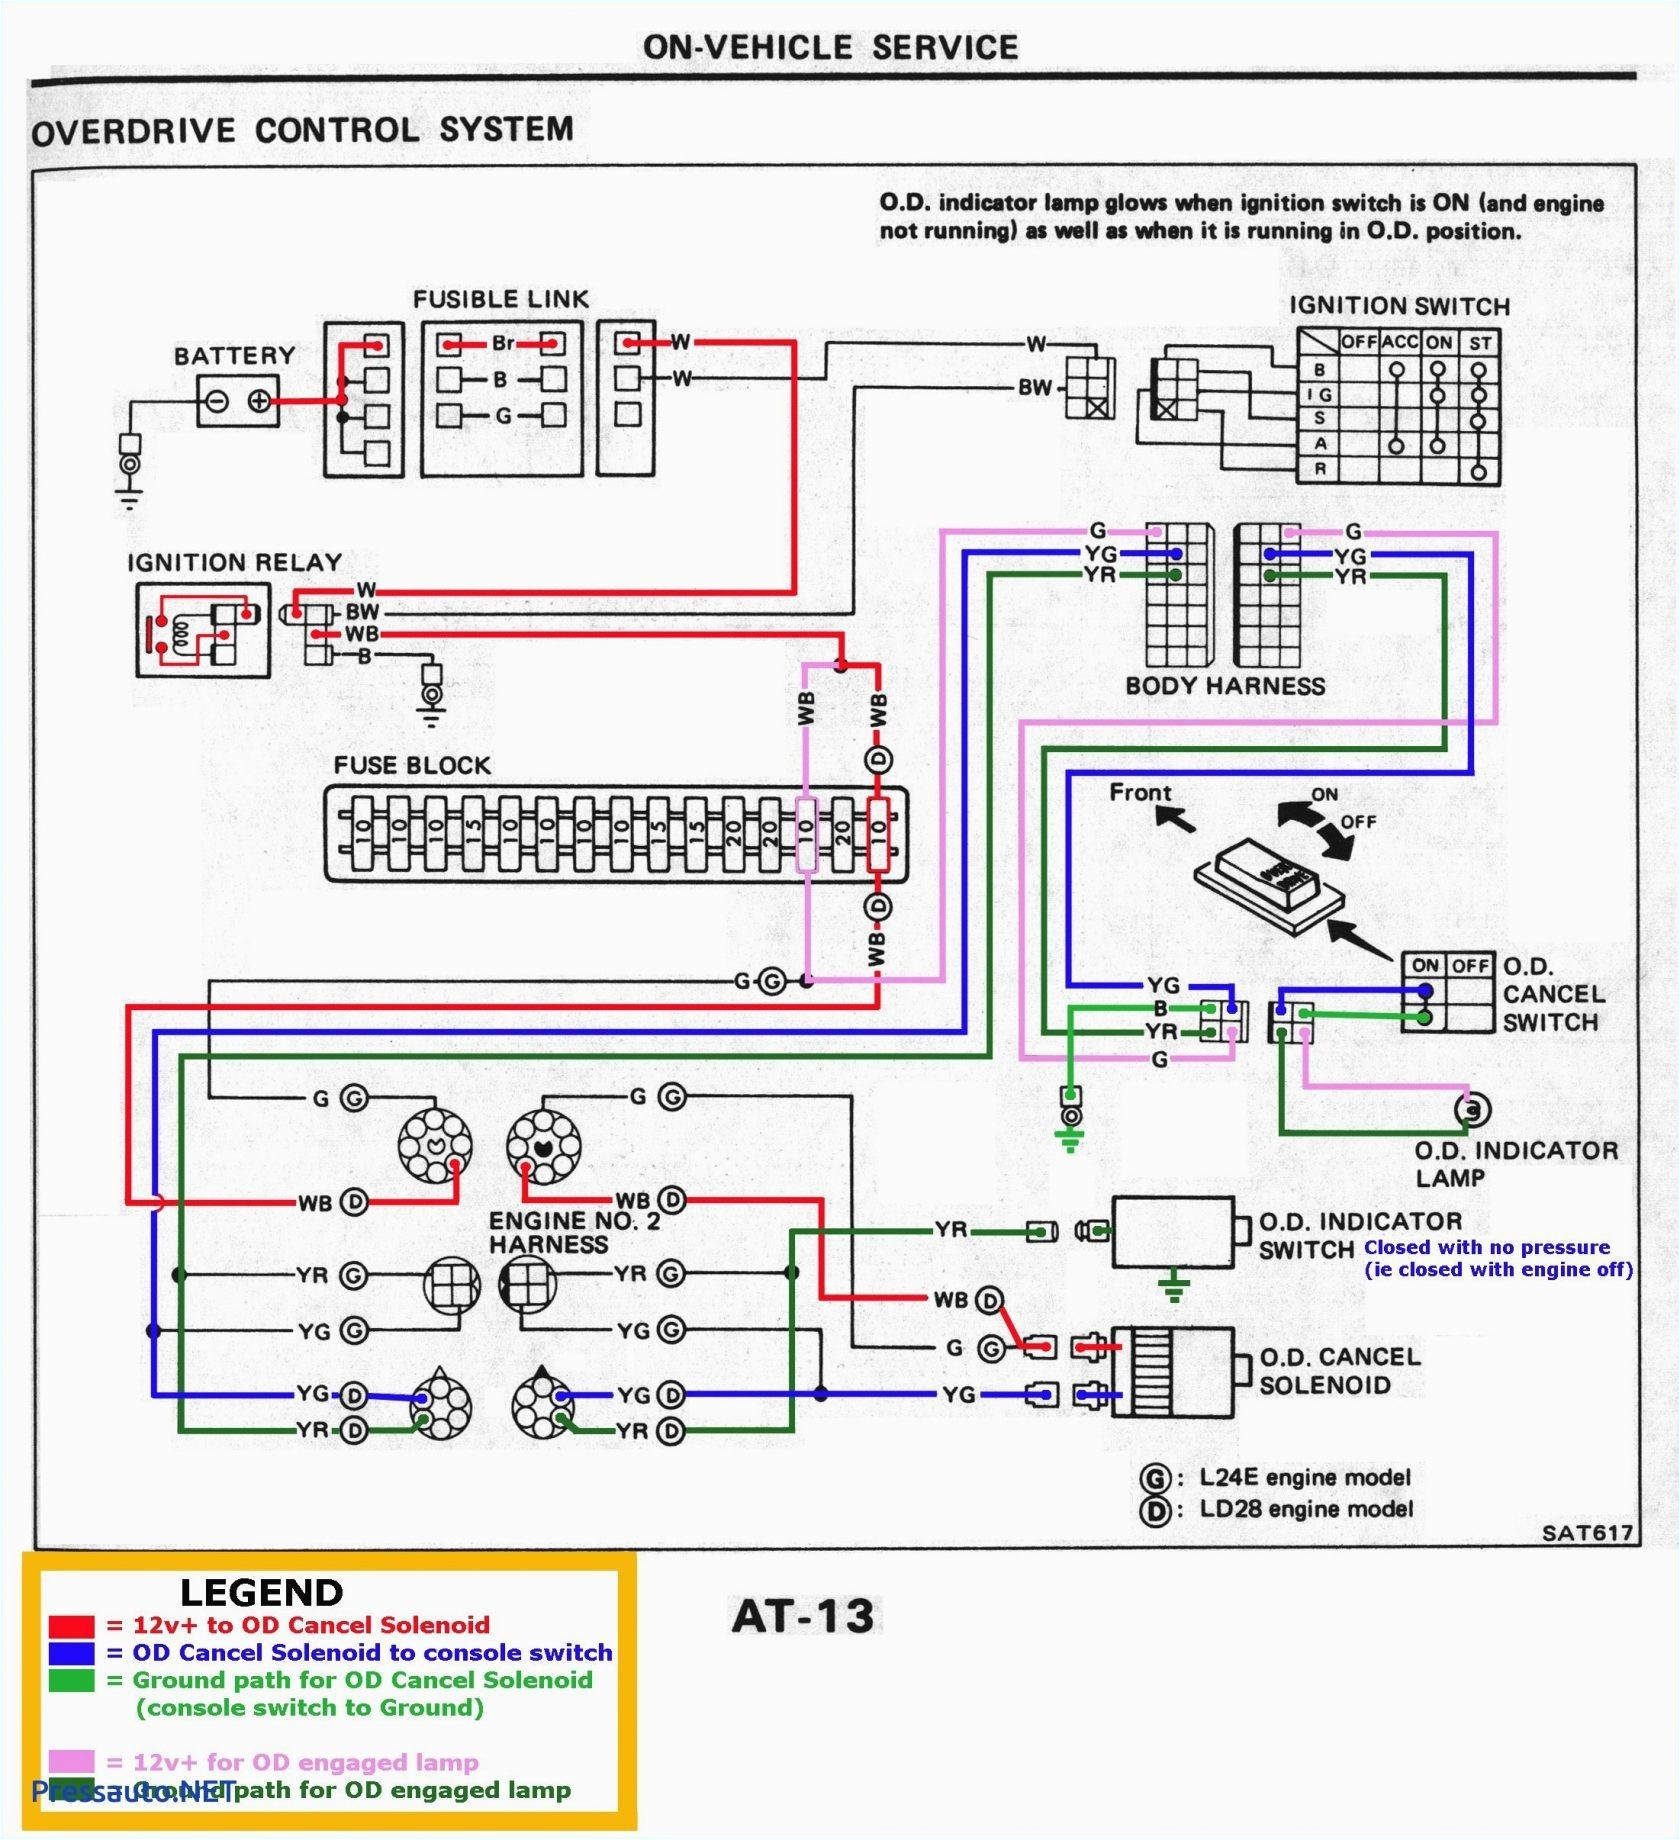 dc current indicator 6 basiccircuit circuit diagram seekiccom index 18 led and light circuit circuit diagram seekiccom